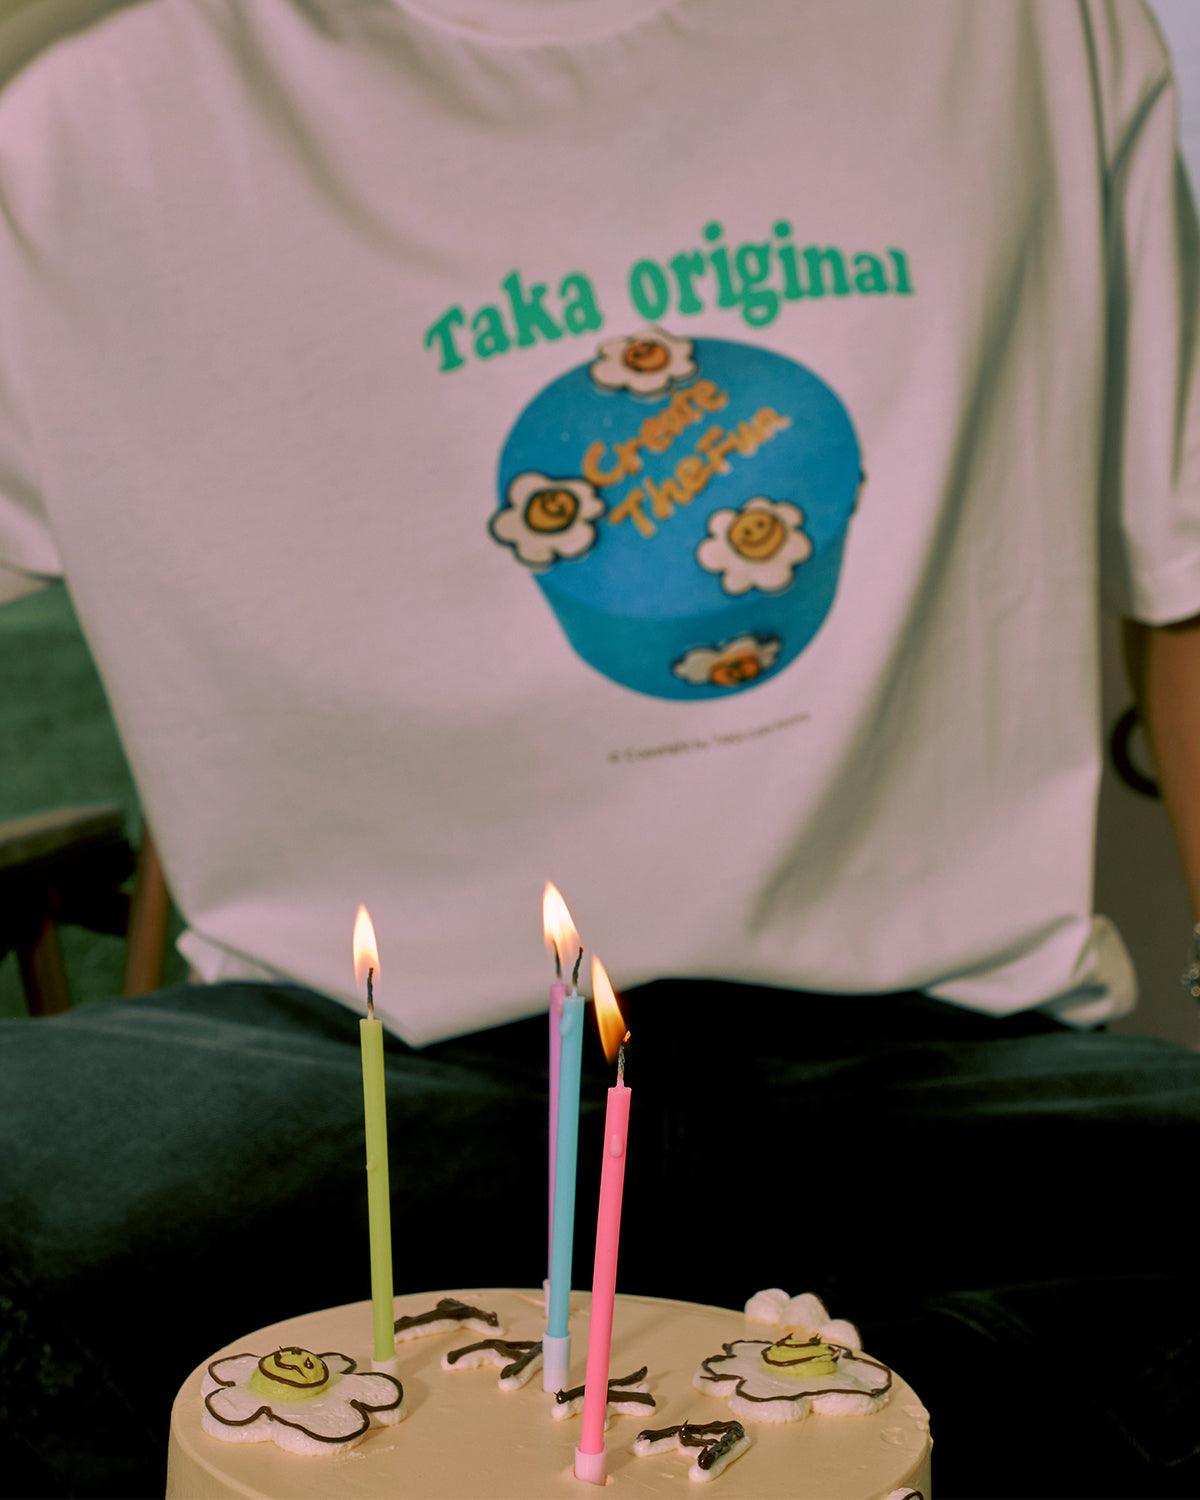 TAKA ORIGINAL LIMITED - TAKA Original That's Fun cake print logo T-shirt